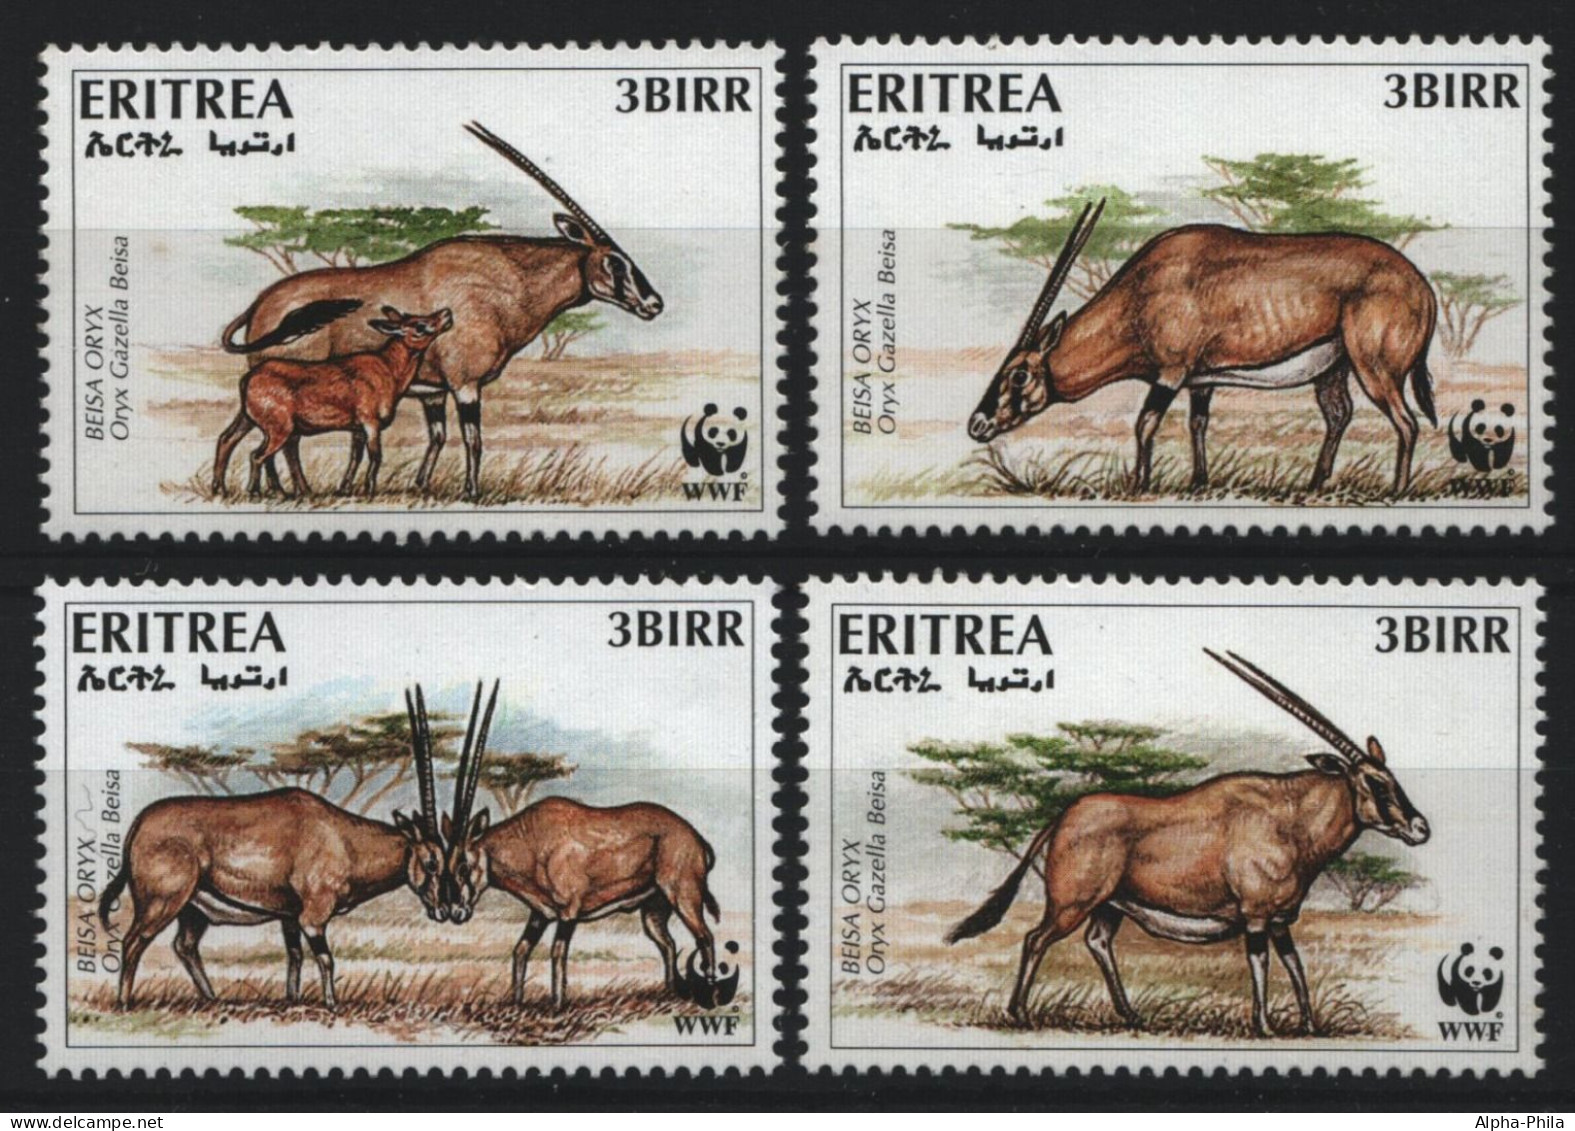 Eritrea 1996 - Mi-Nr. 87-90 ** - MNH - Wildtiere / Wild Animals - Eritrea